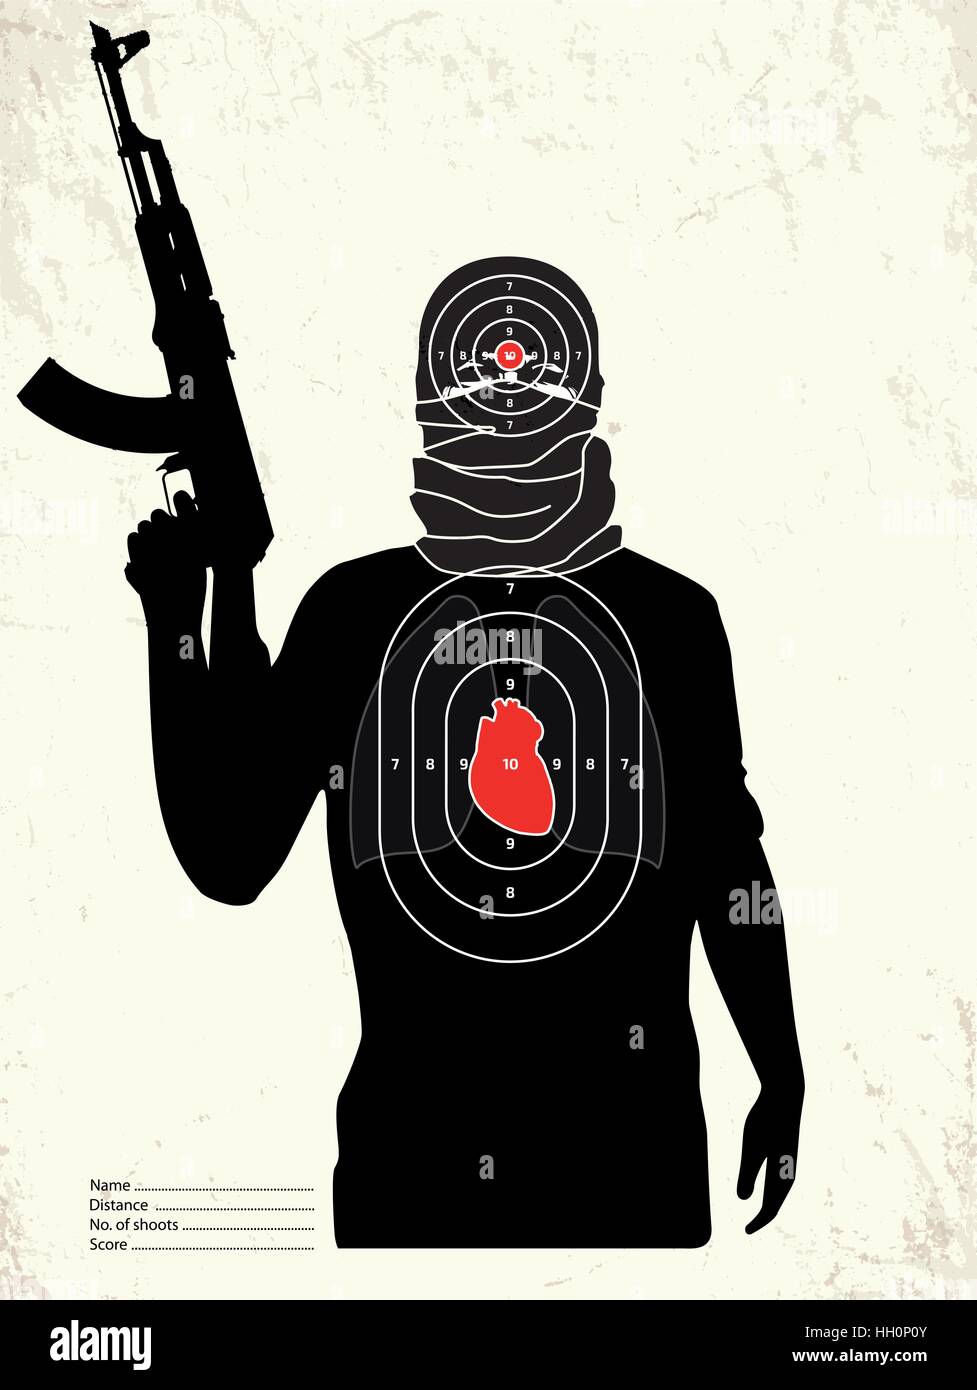 Terrorist - shooting range target Stock Vector